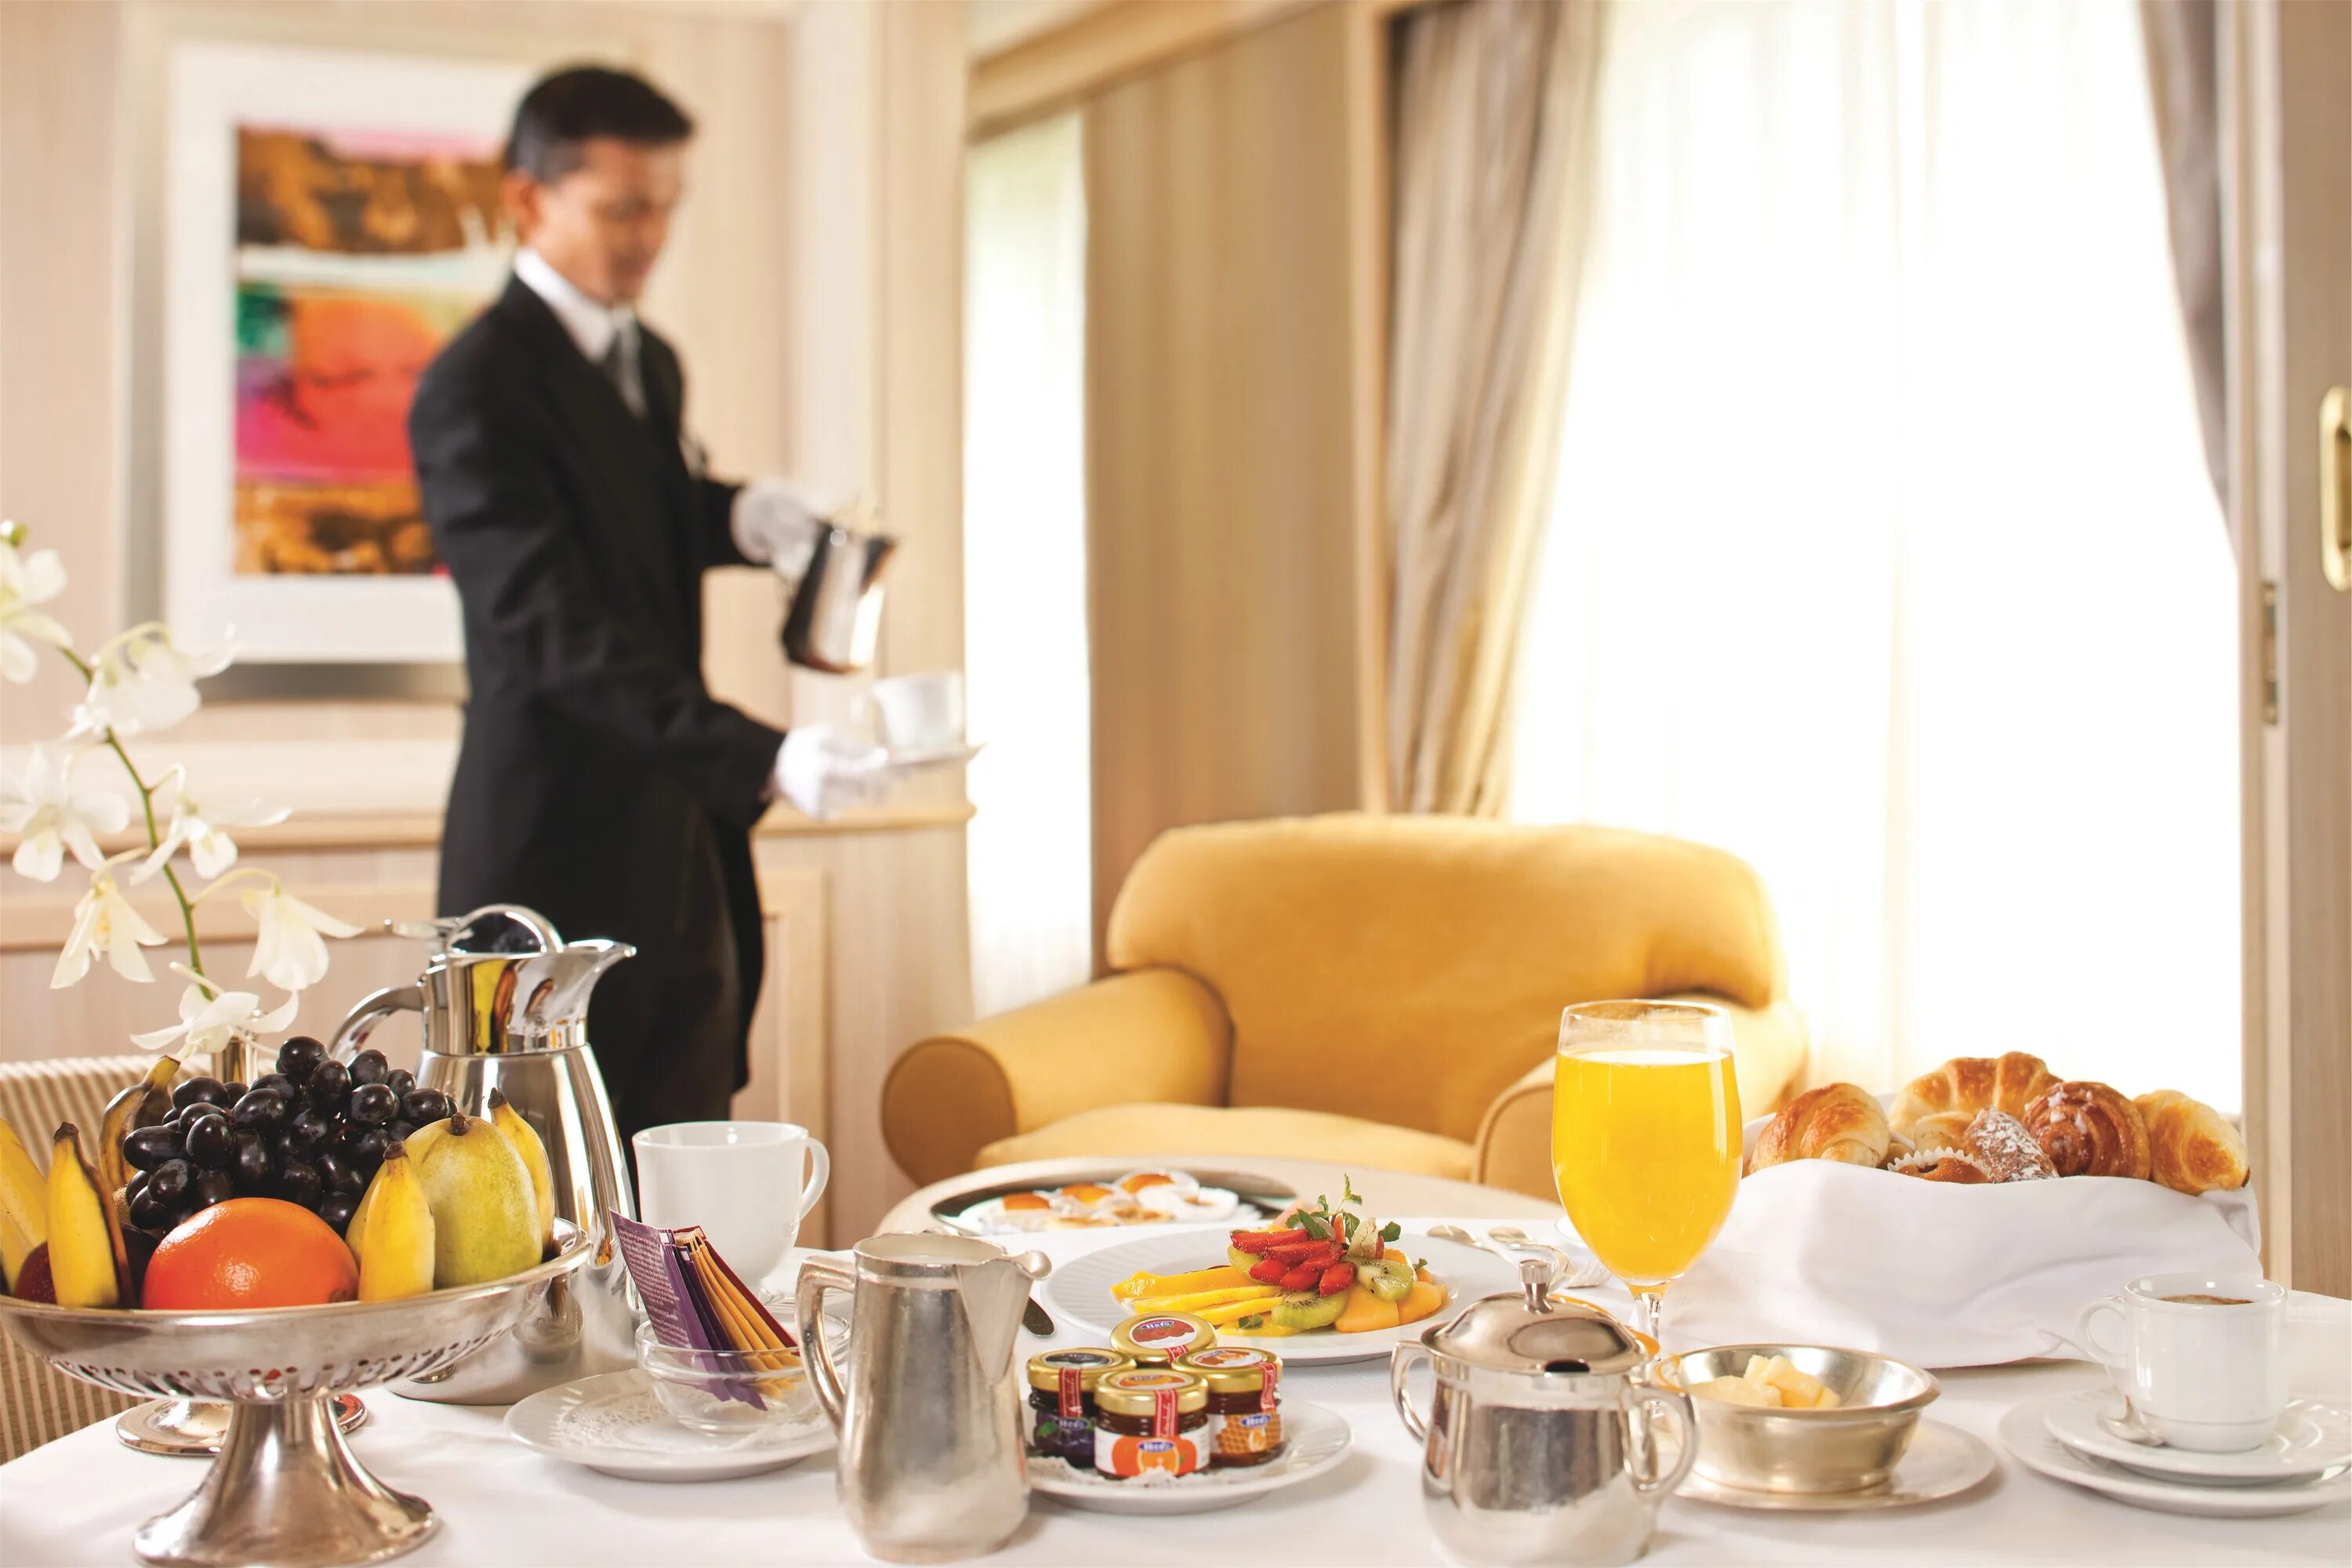 Рум сервис в гостинице. Завтрак в отеле рум сервис. Завтрак в гостинице. Завтрак в номере отеля. Качество услуги питания